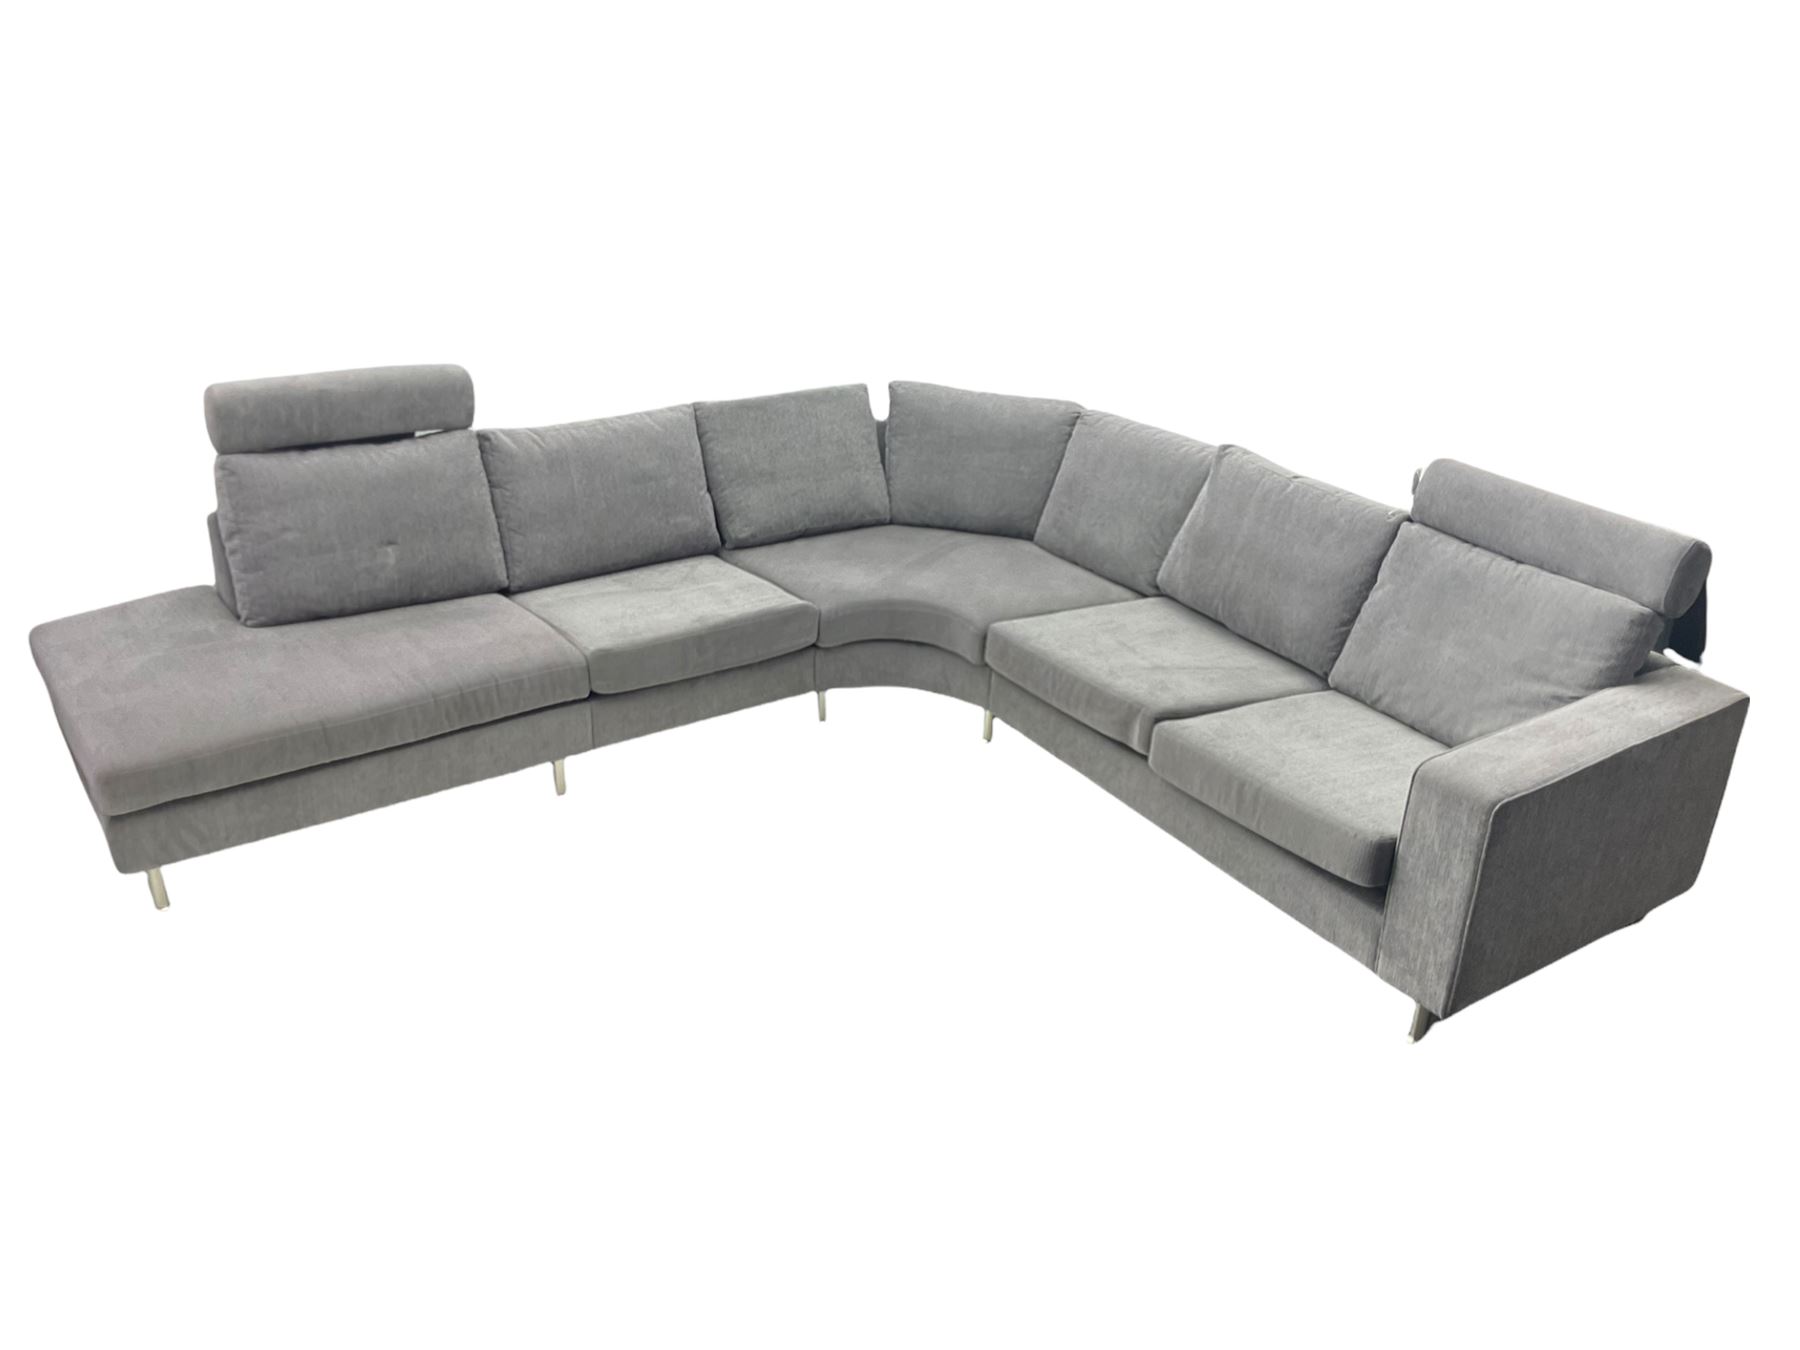 BoConcept 'Indivi 2' corner lounge sofa in grey Matera fabric - Image 2 of 8